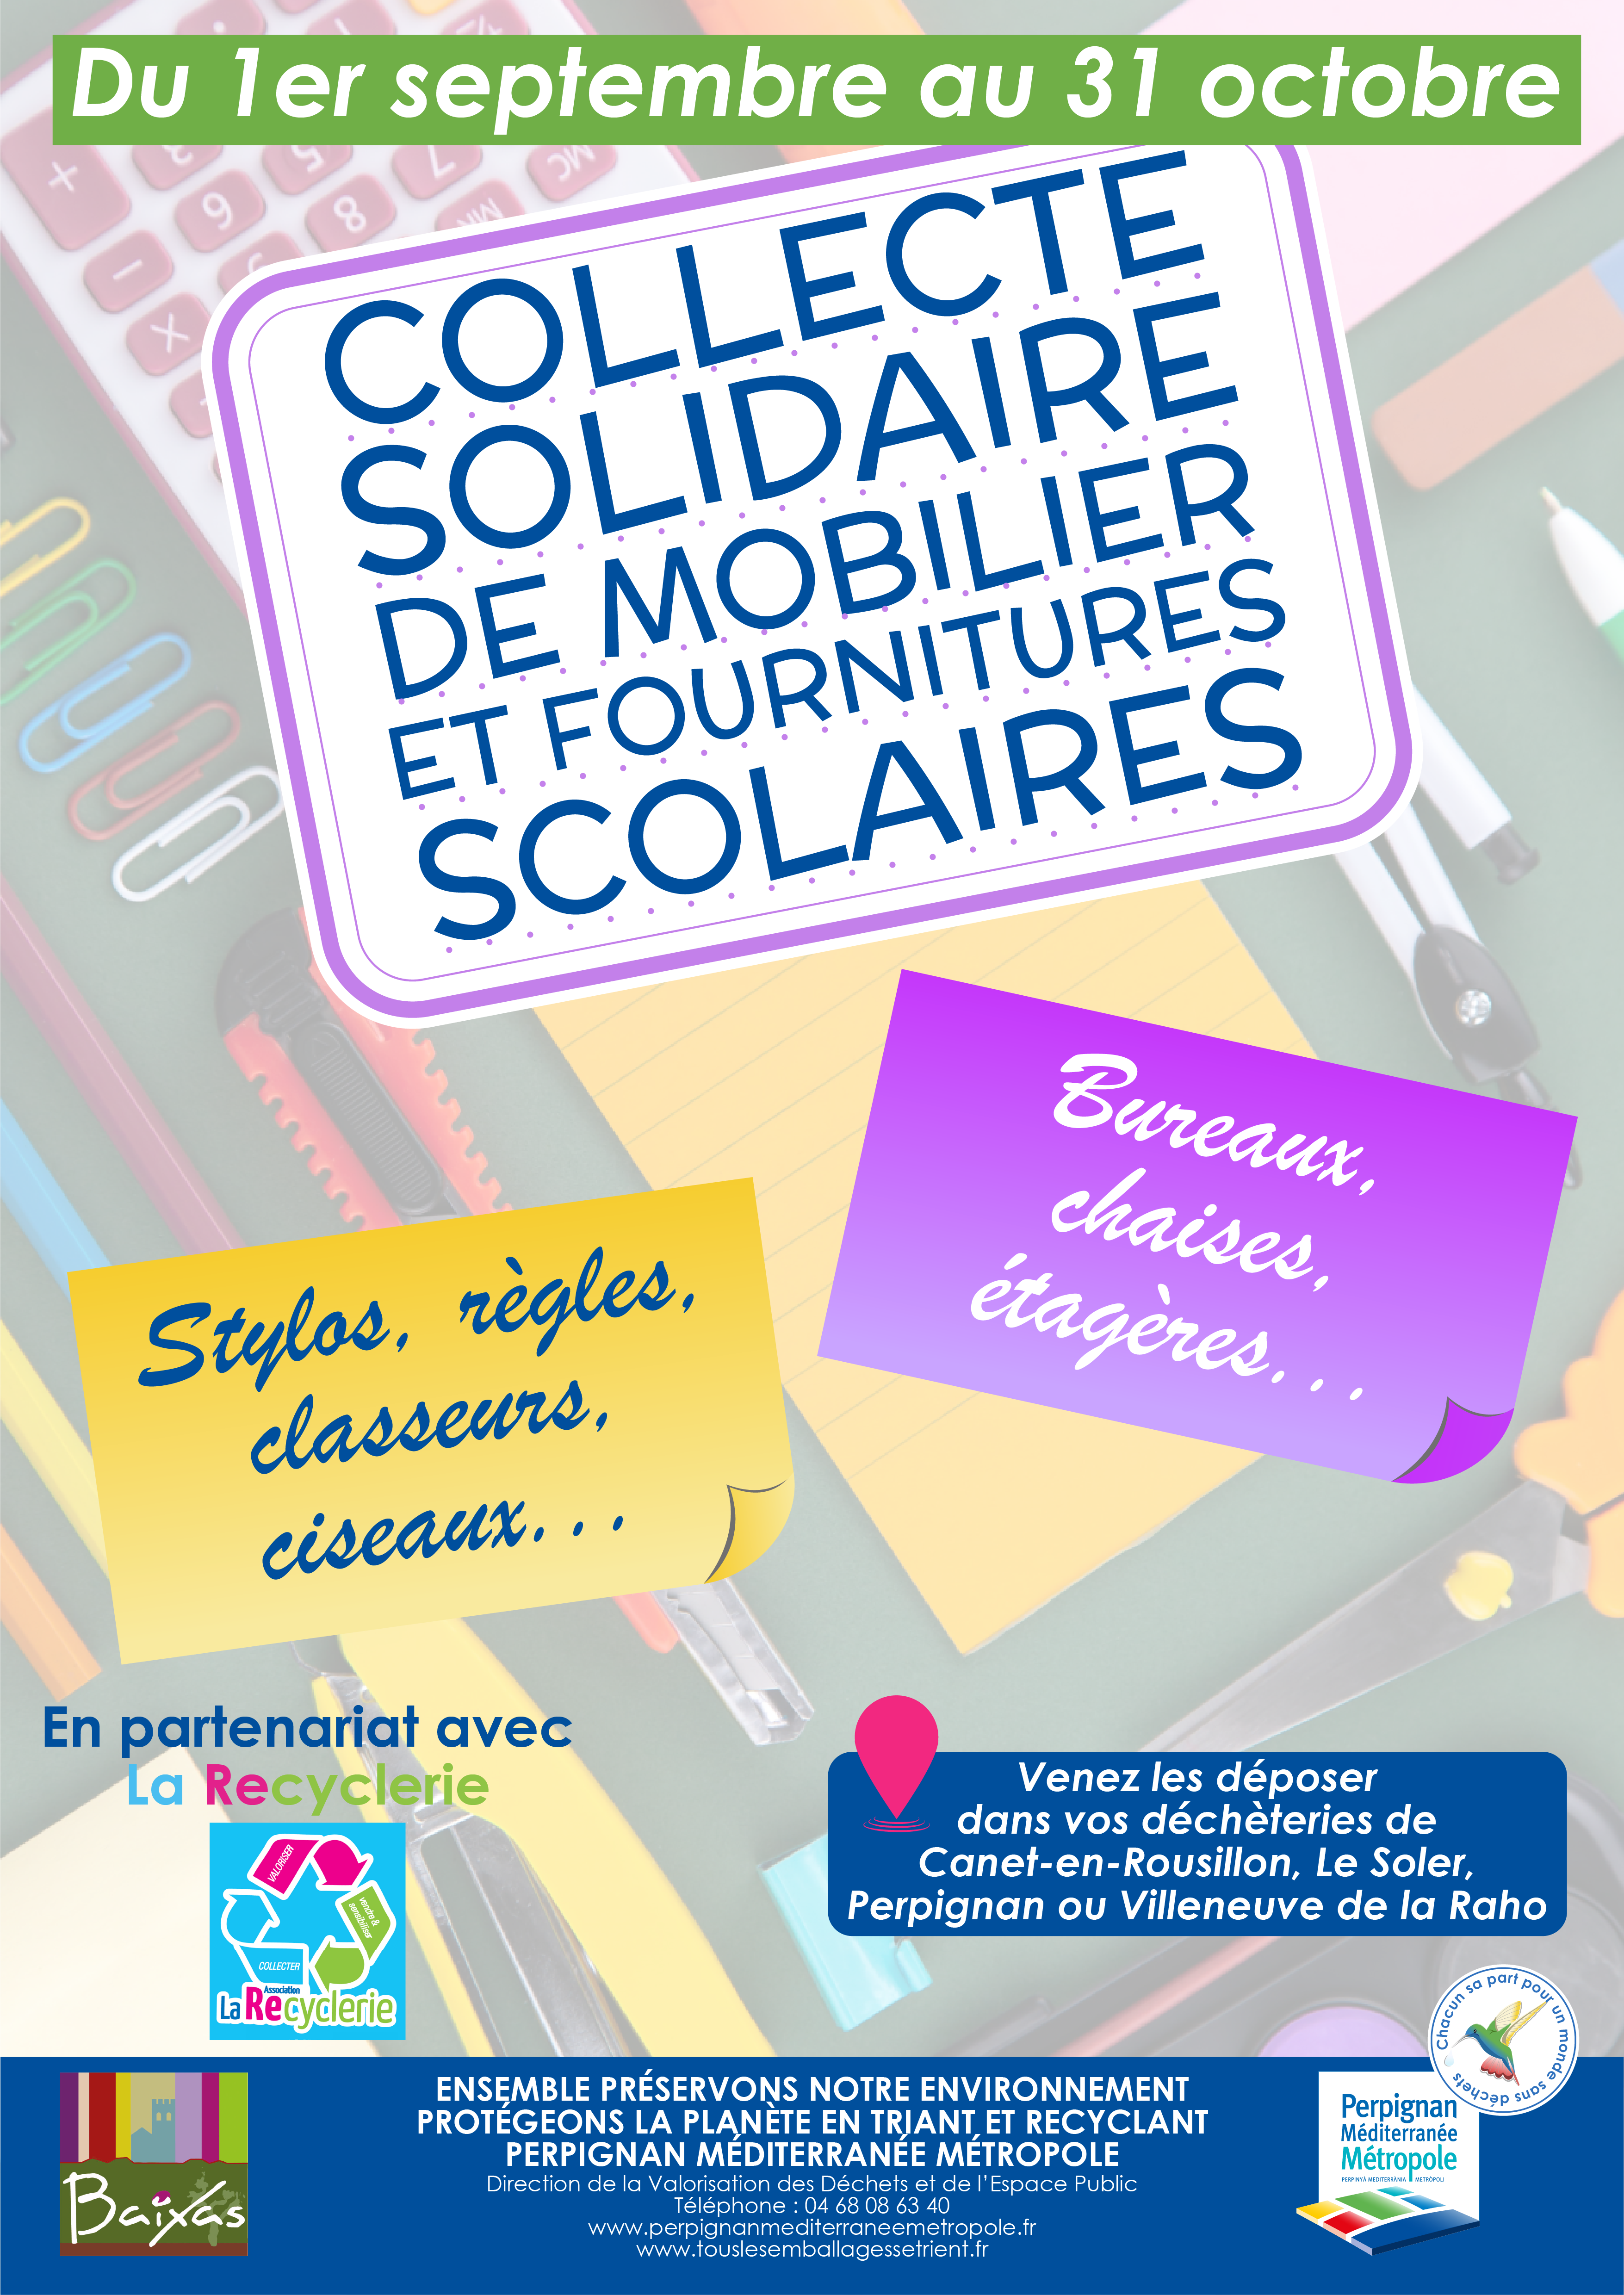 Baixas - Campagne Sept. Oct. Collecte scolaire